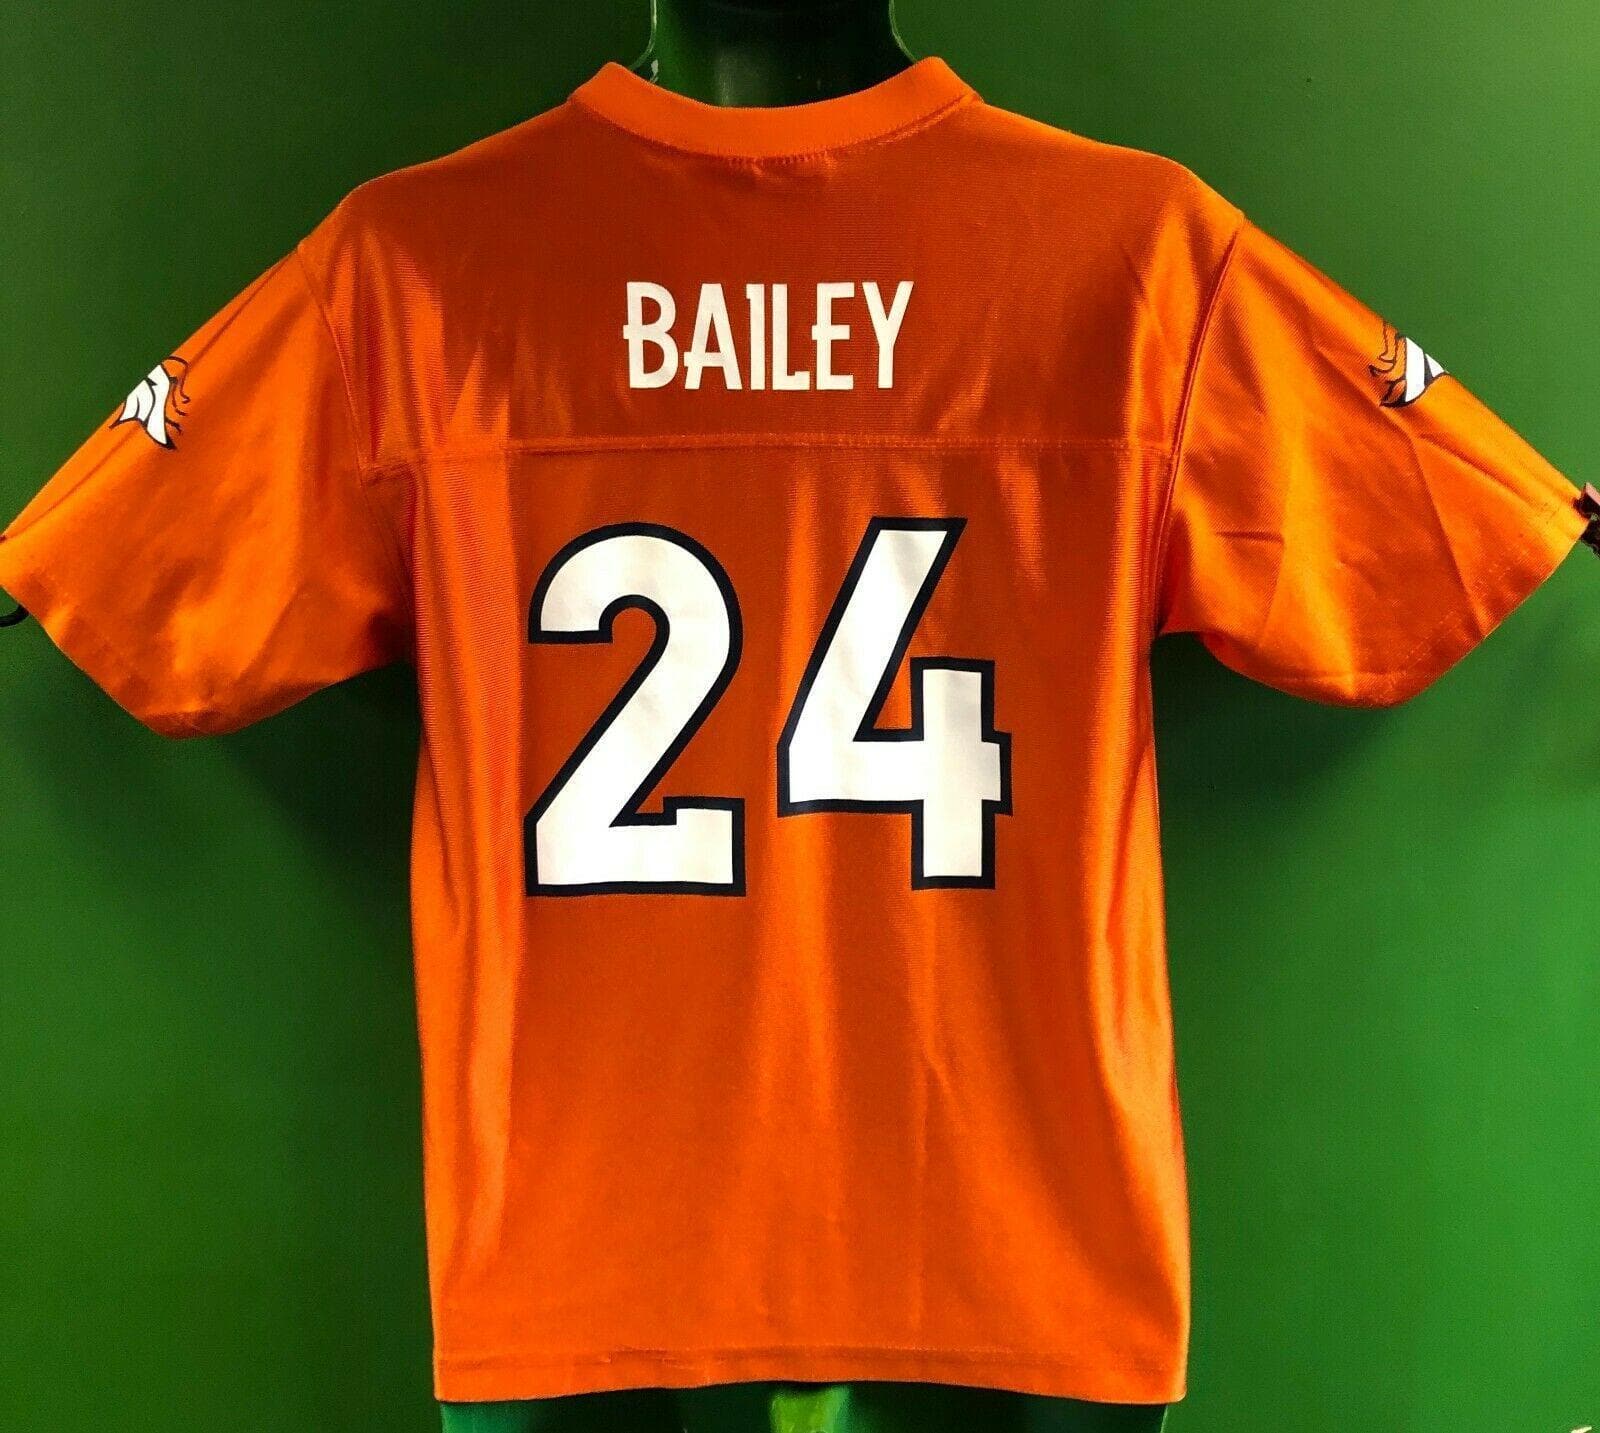 NFL Denver Broncos Champ Bailey #24 Jersey Youth Large 14-16